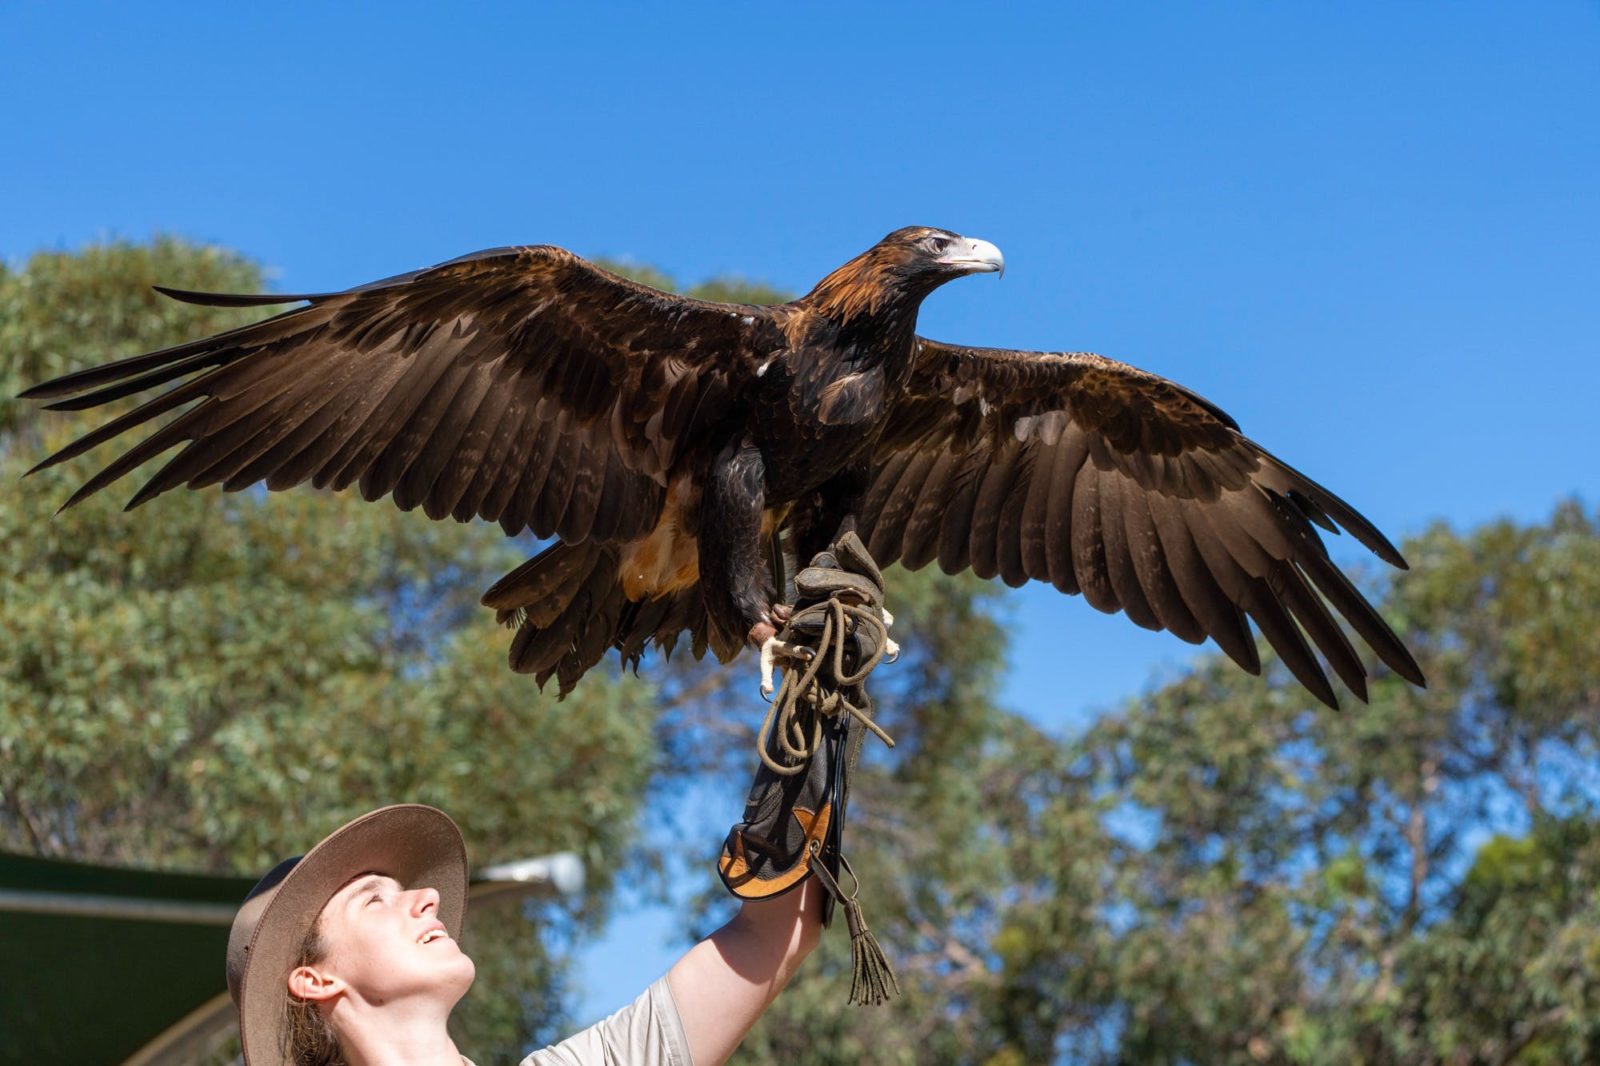 Wedge-tailed eagle, bird show, raptor domain, eagle hold, hold an eagle, Kangaroo Island